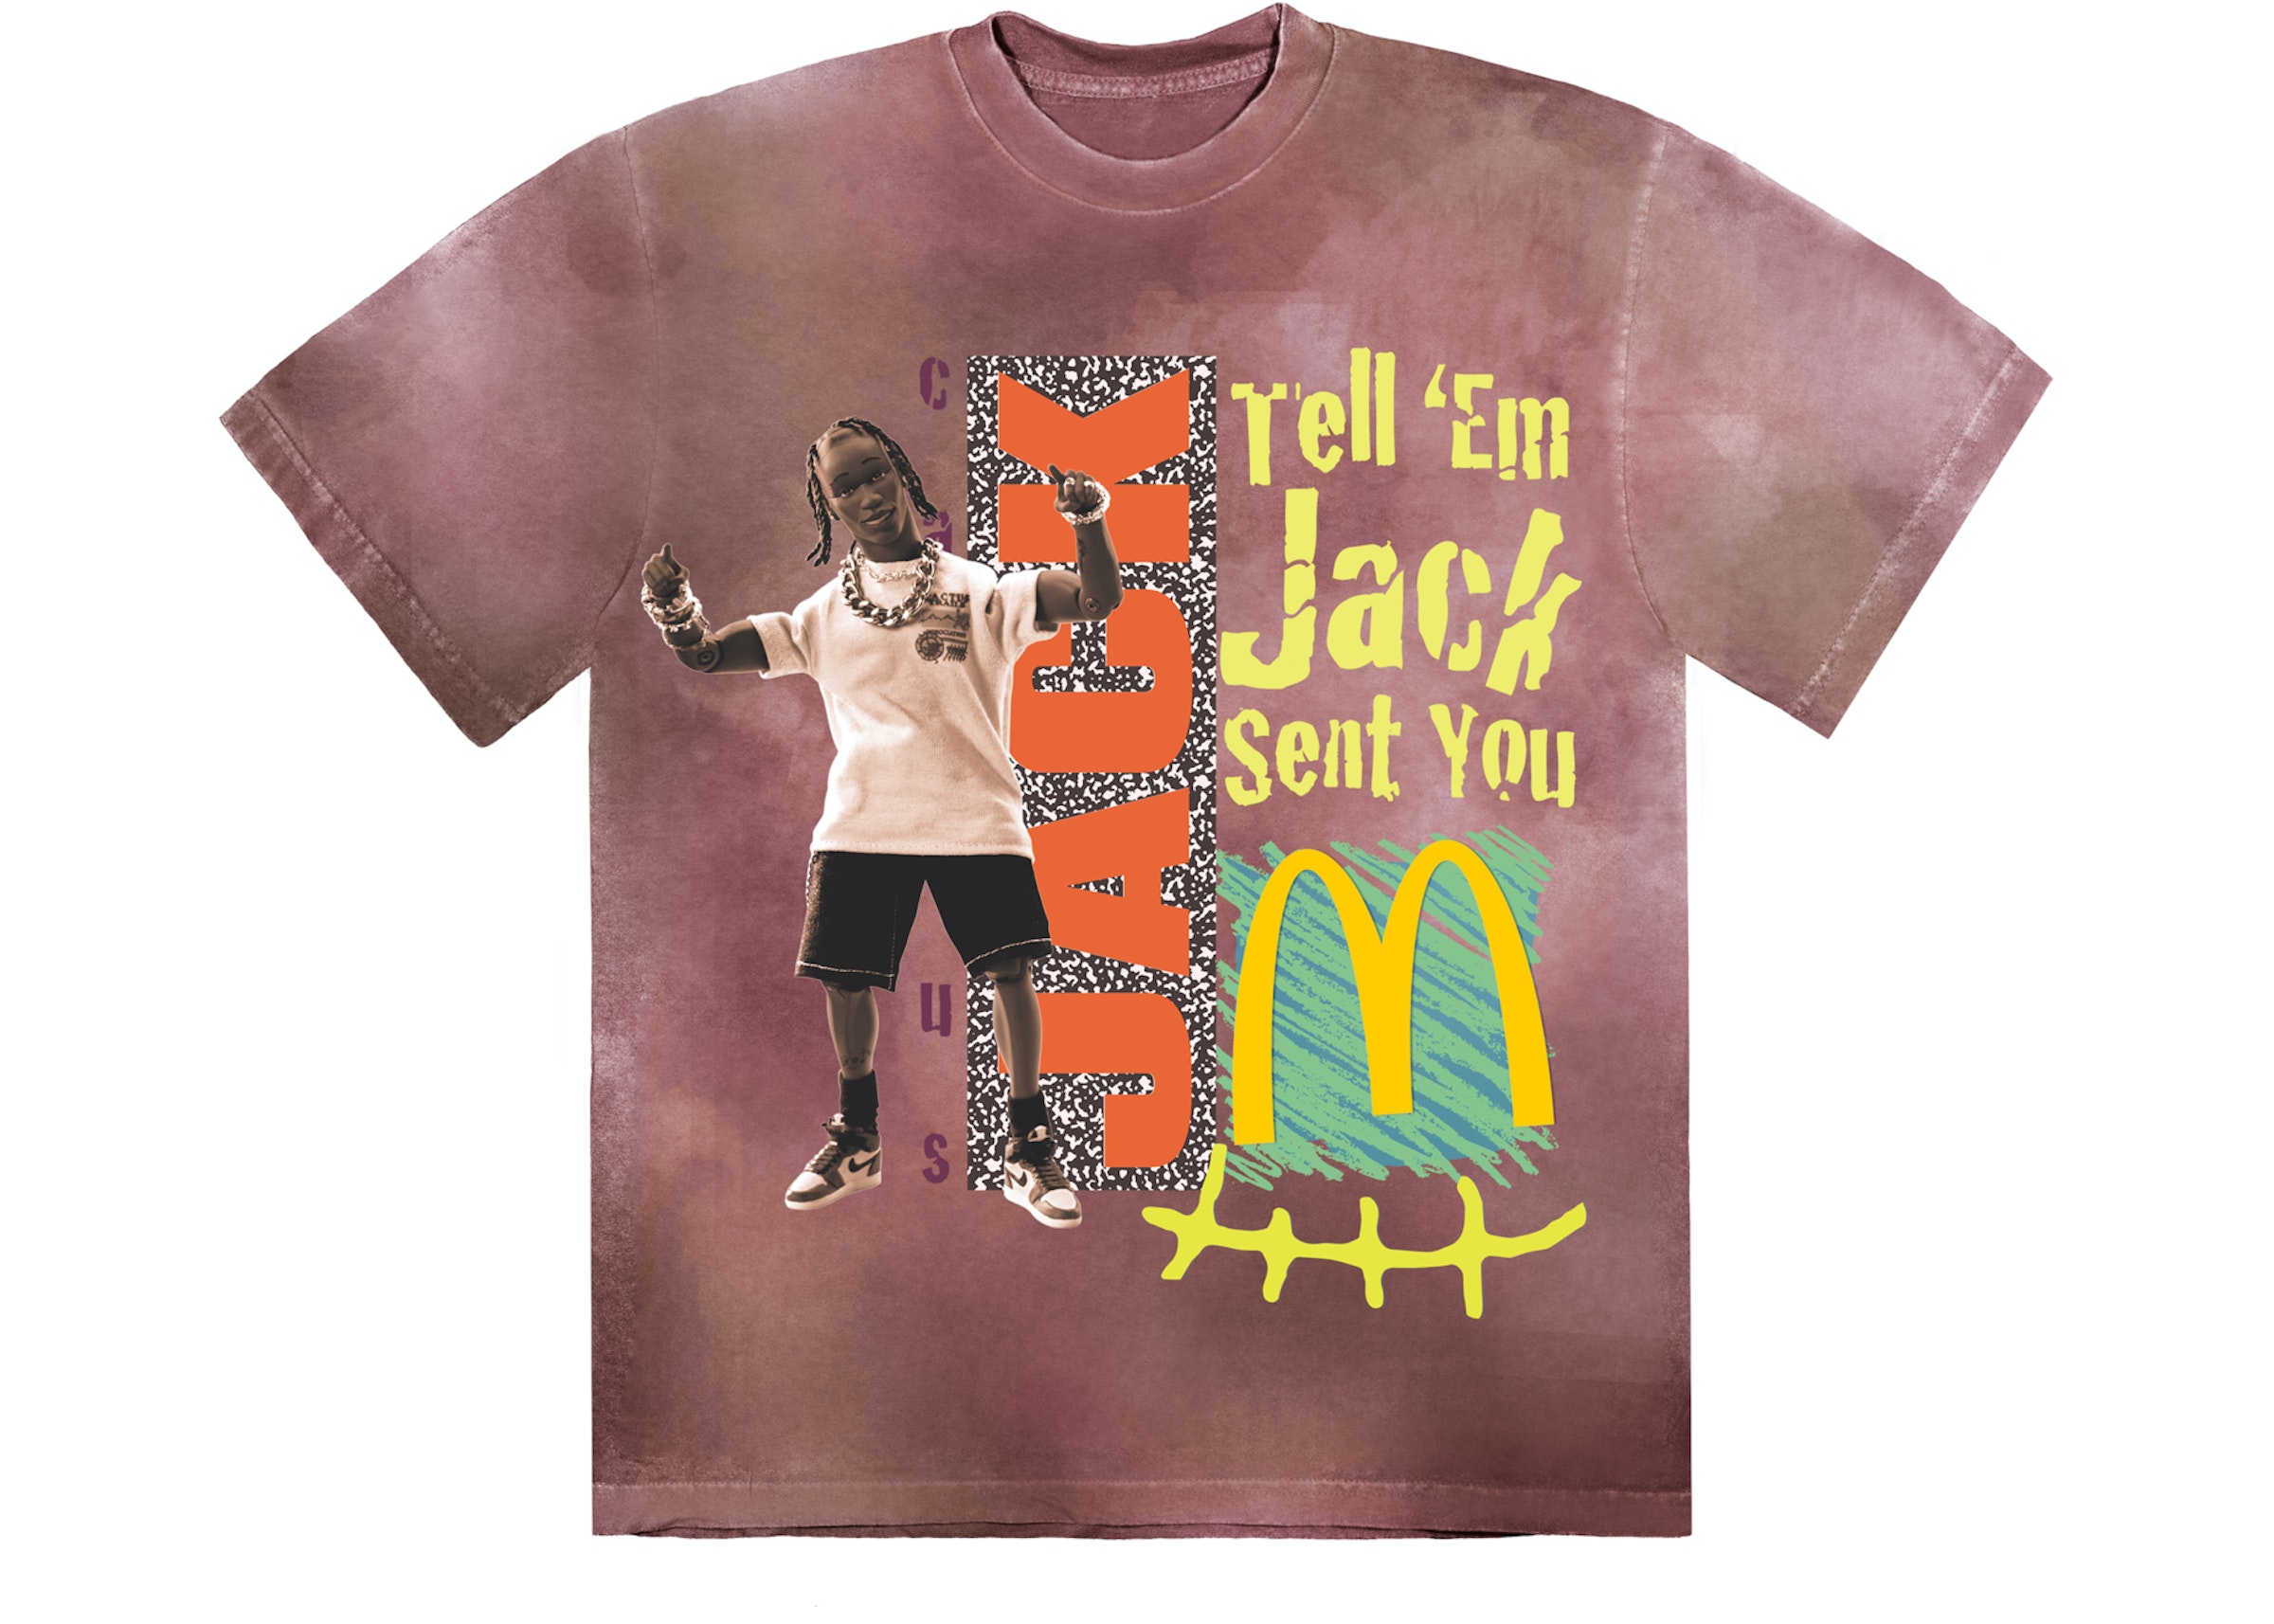 Efternavn Sanselig rolle Travis Scott x McDonald's Jack Smile II T-Shirt Berry - FW20 Men's - US